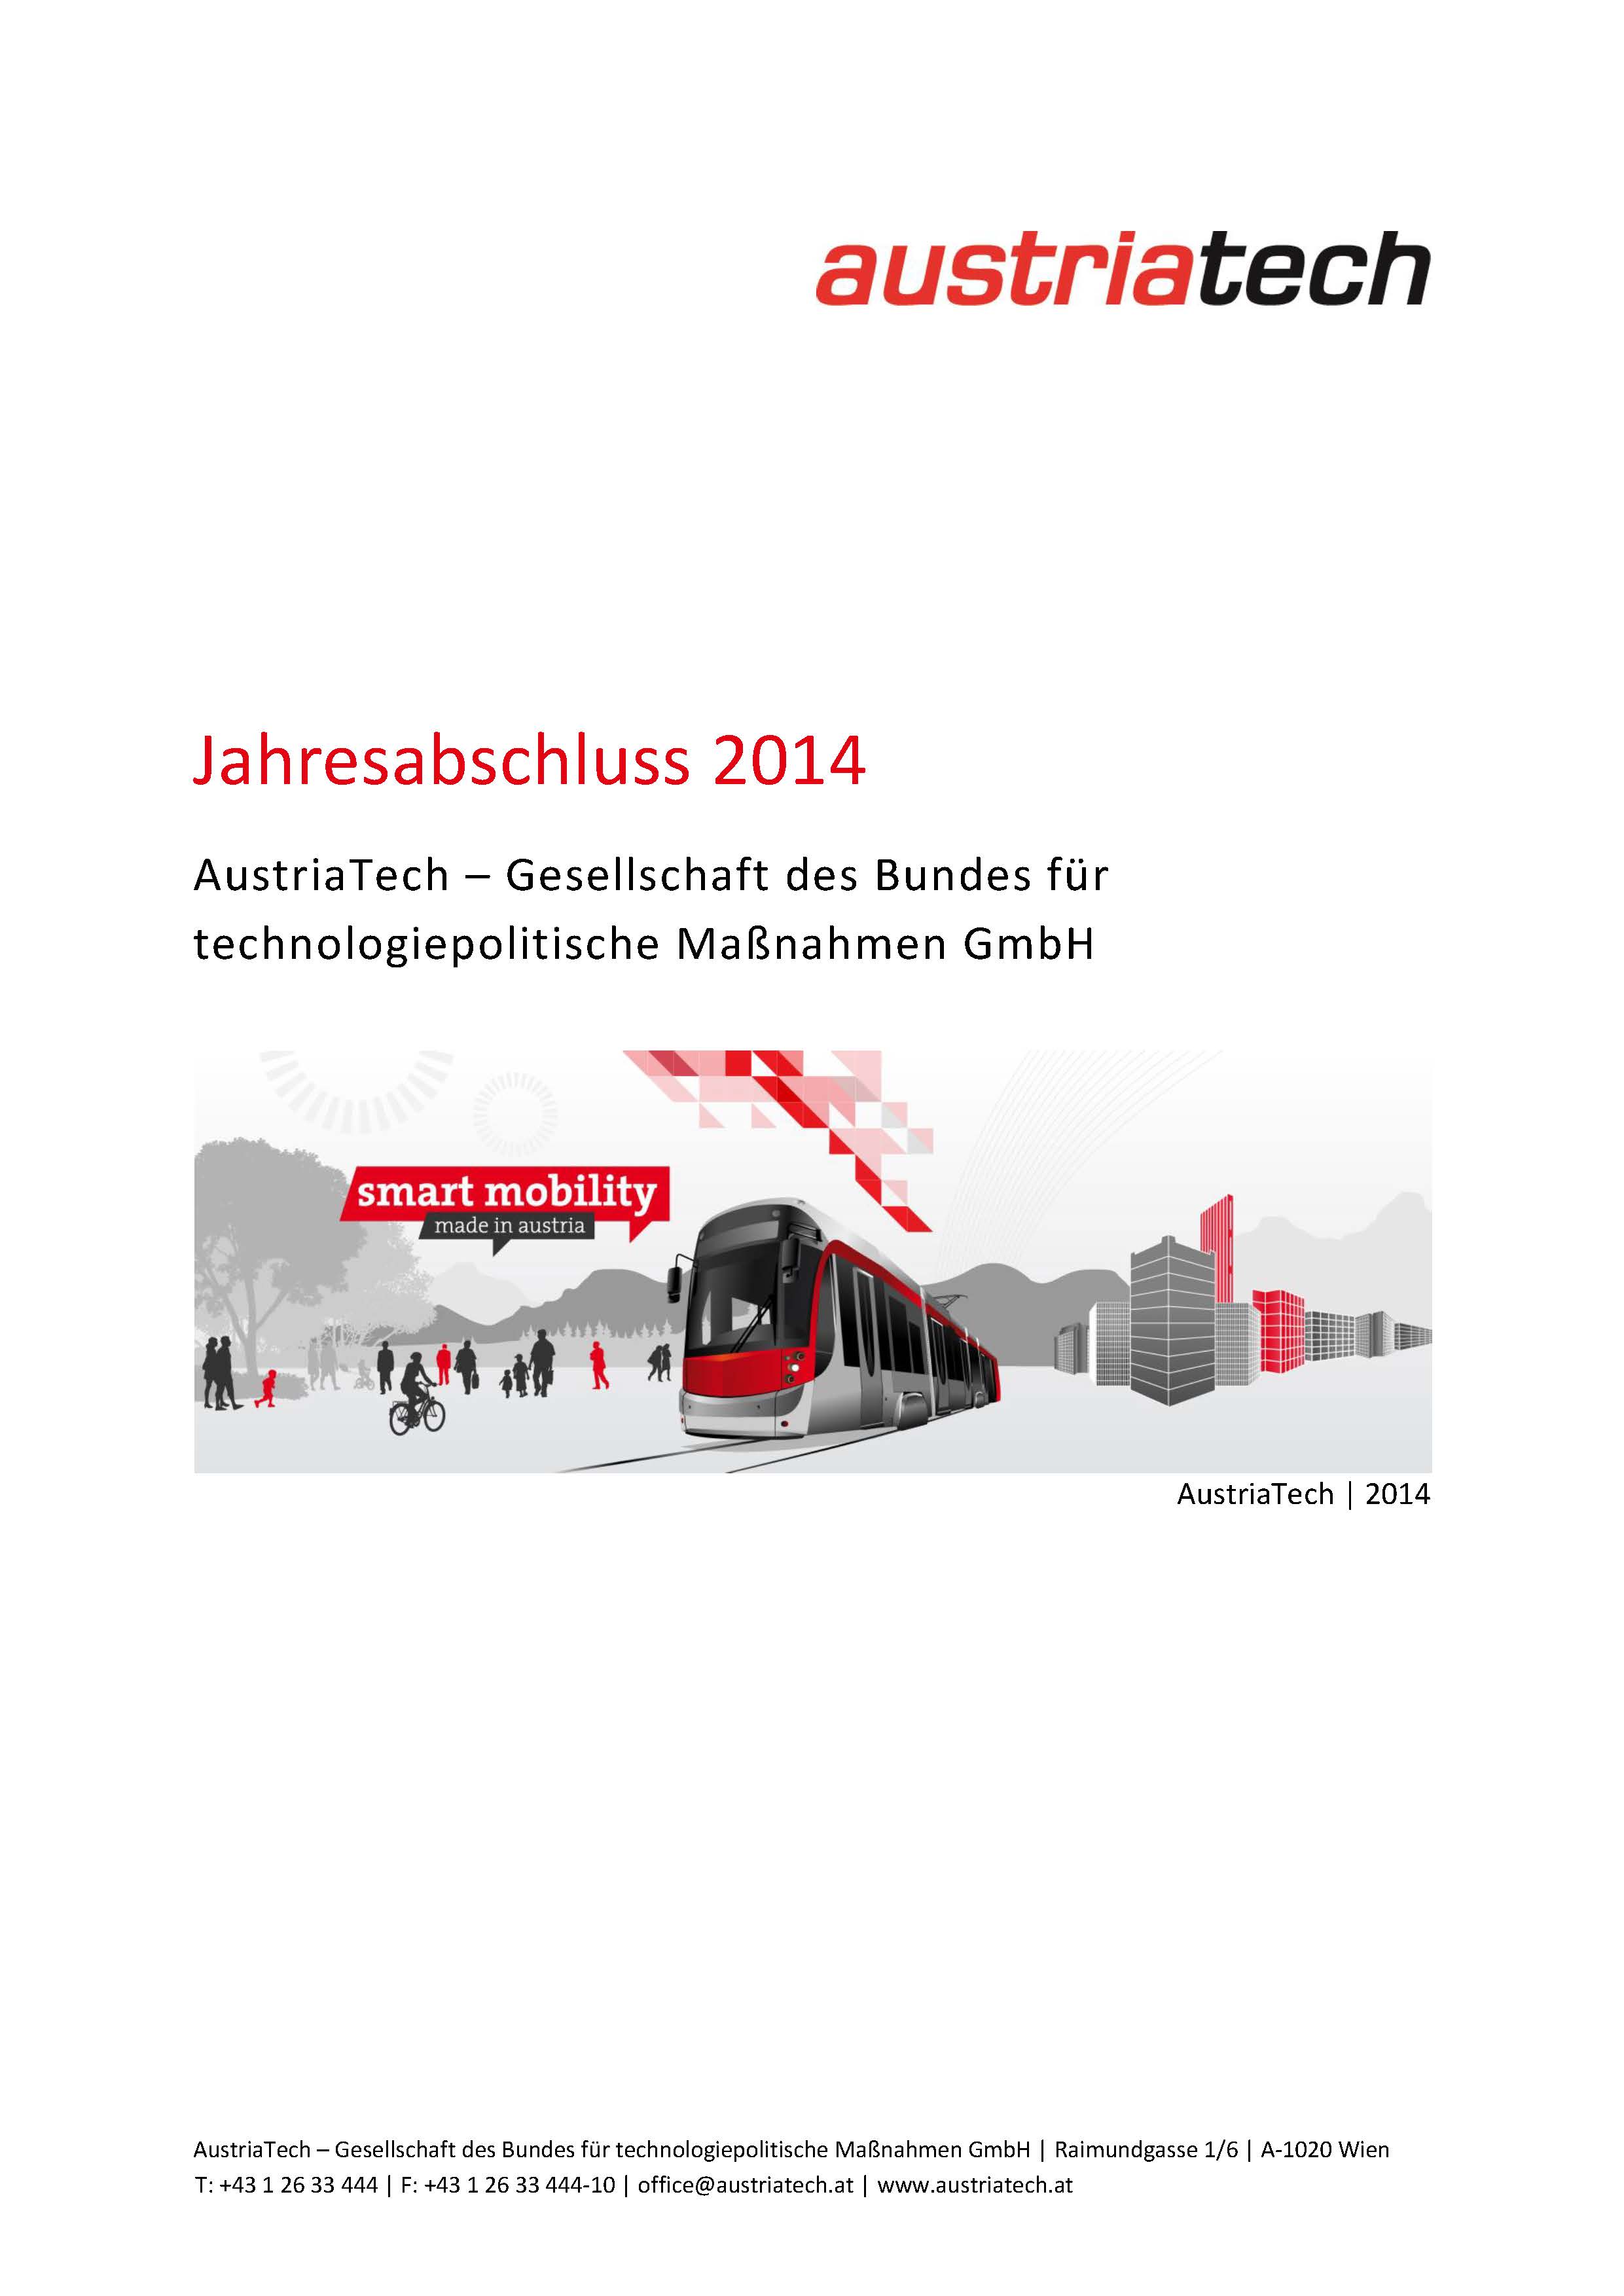 AustriaTech Jahreabschluss 2014